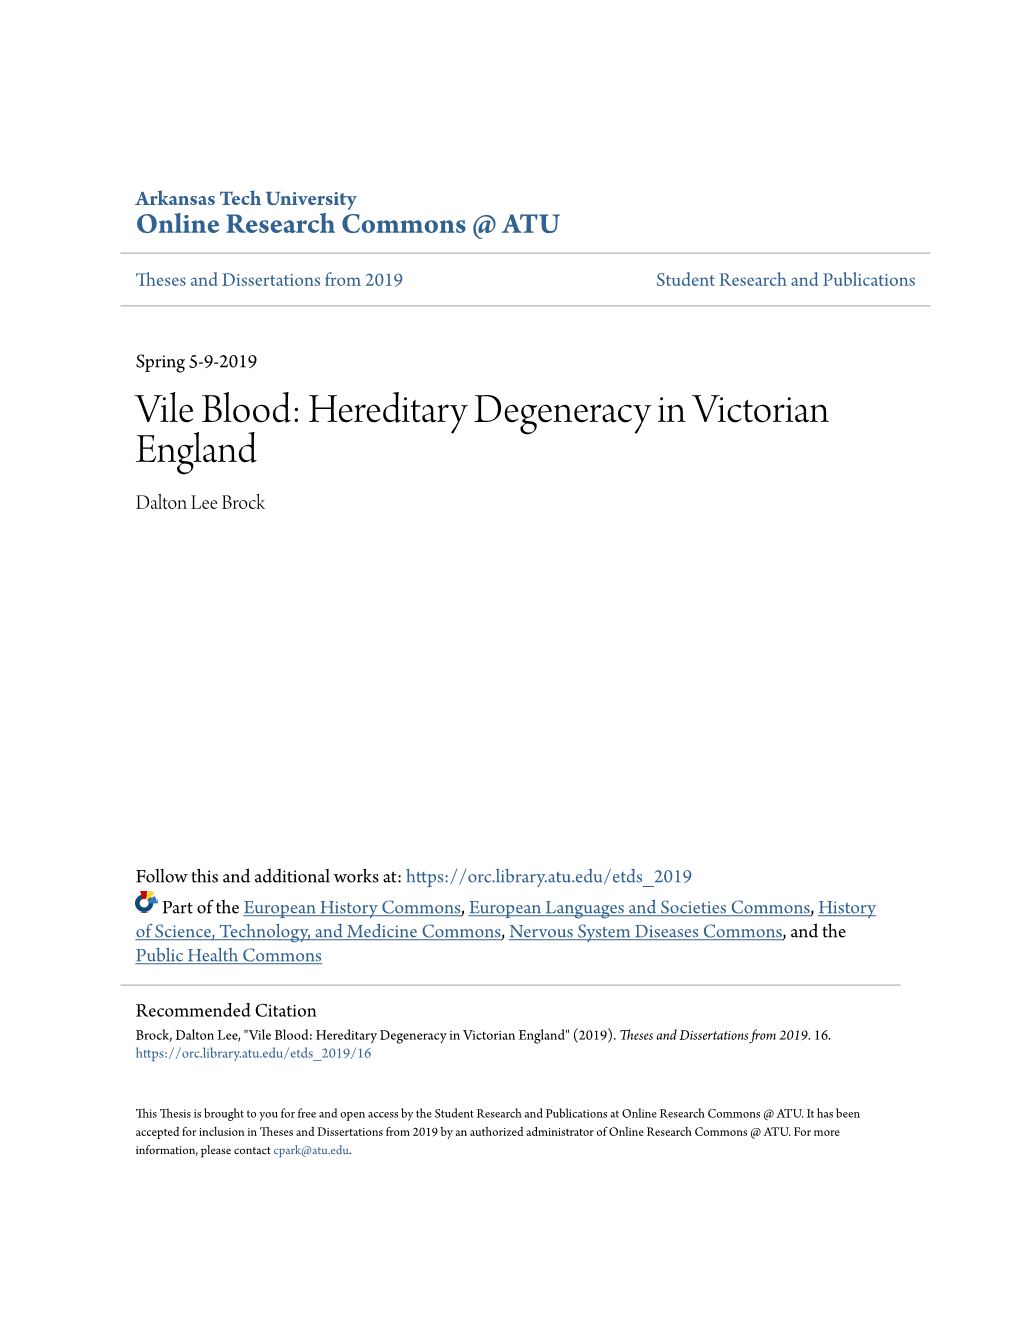 Vile Blood: Hereditary Degeneracy in Victorian England Dalton Lee Brock